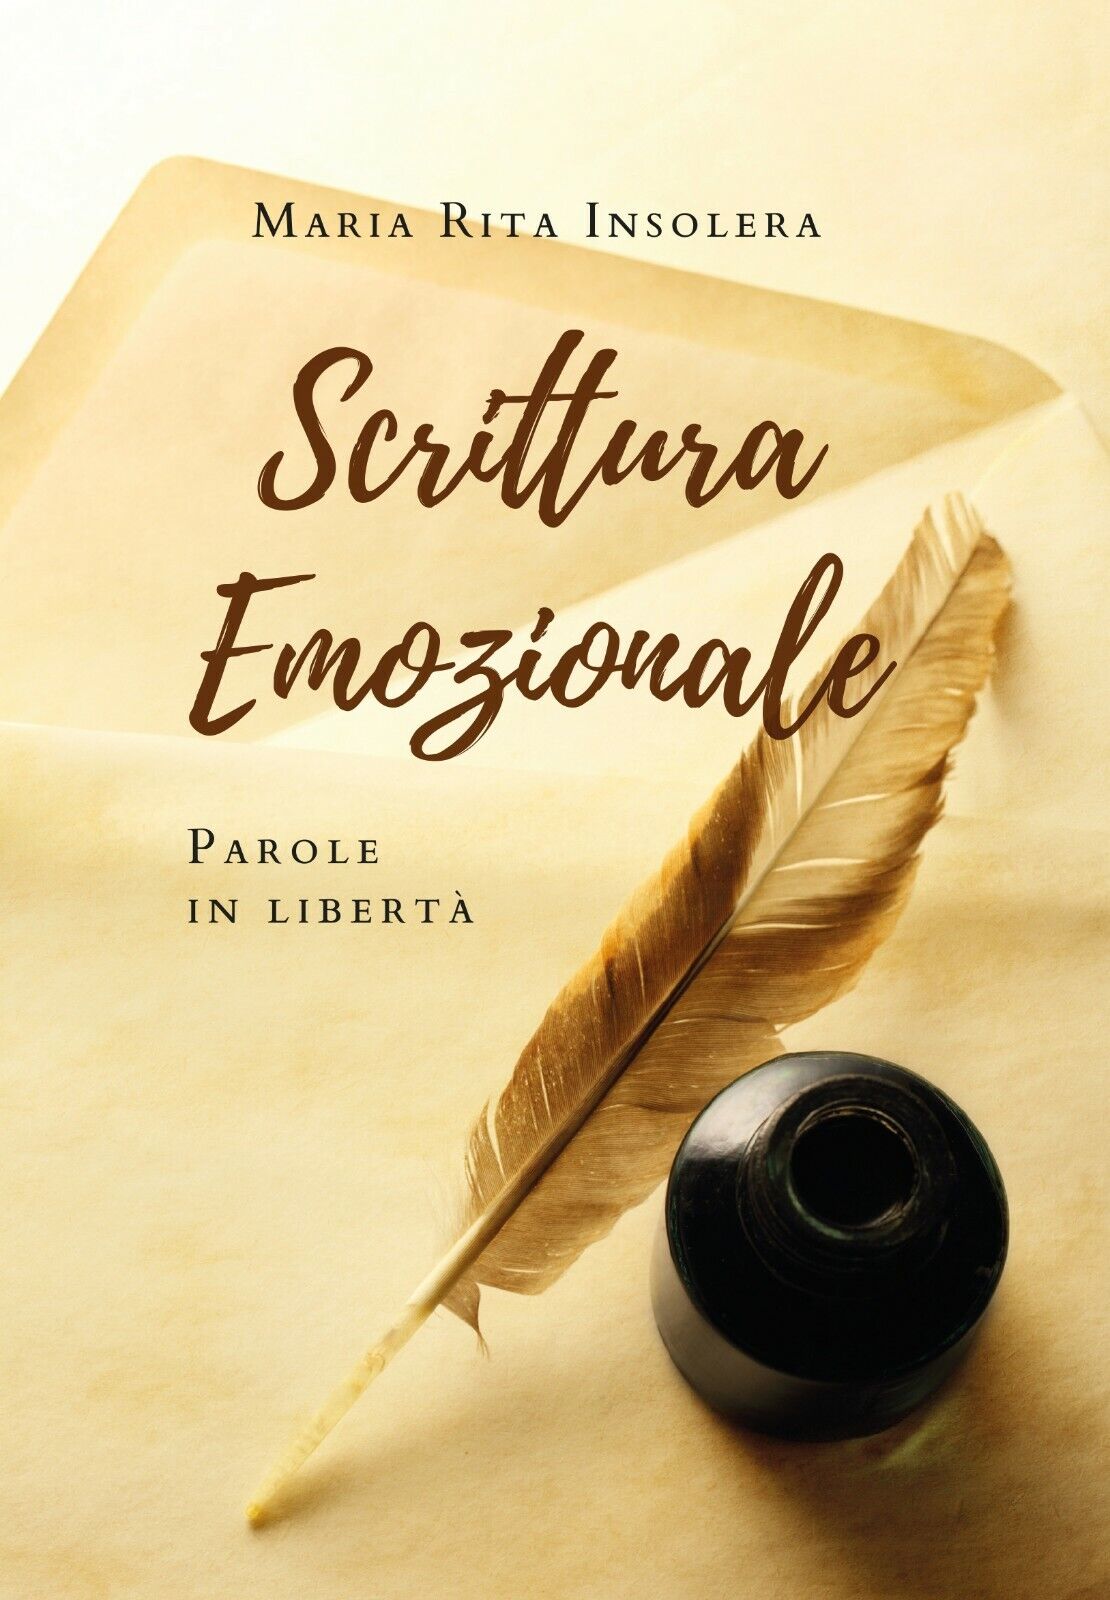 Scrittura Emozionale - Parole in Libert?, Maria Rita Insolera,  2020,  Youcanp.